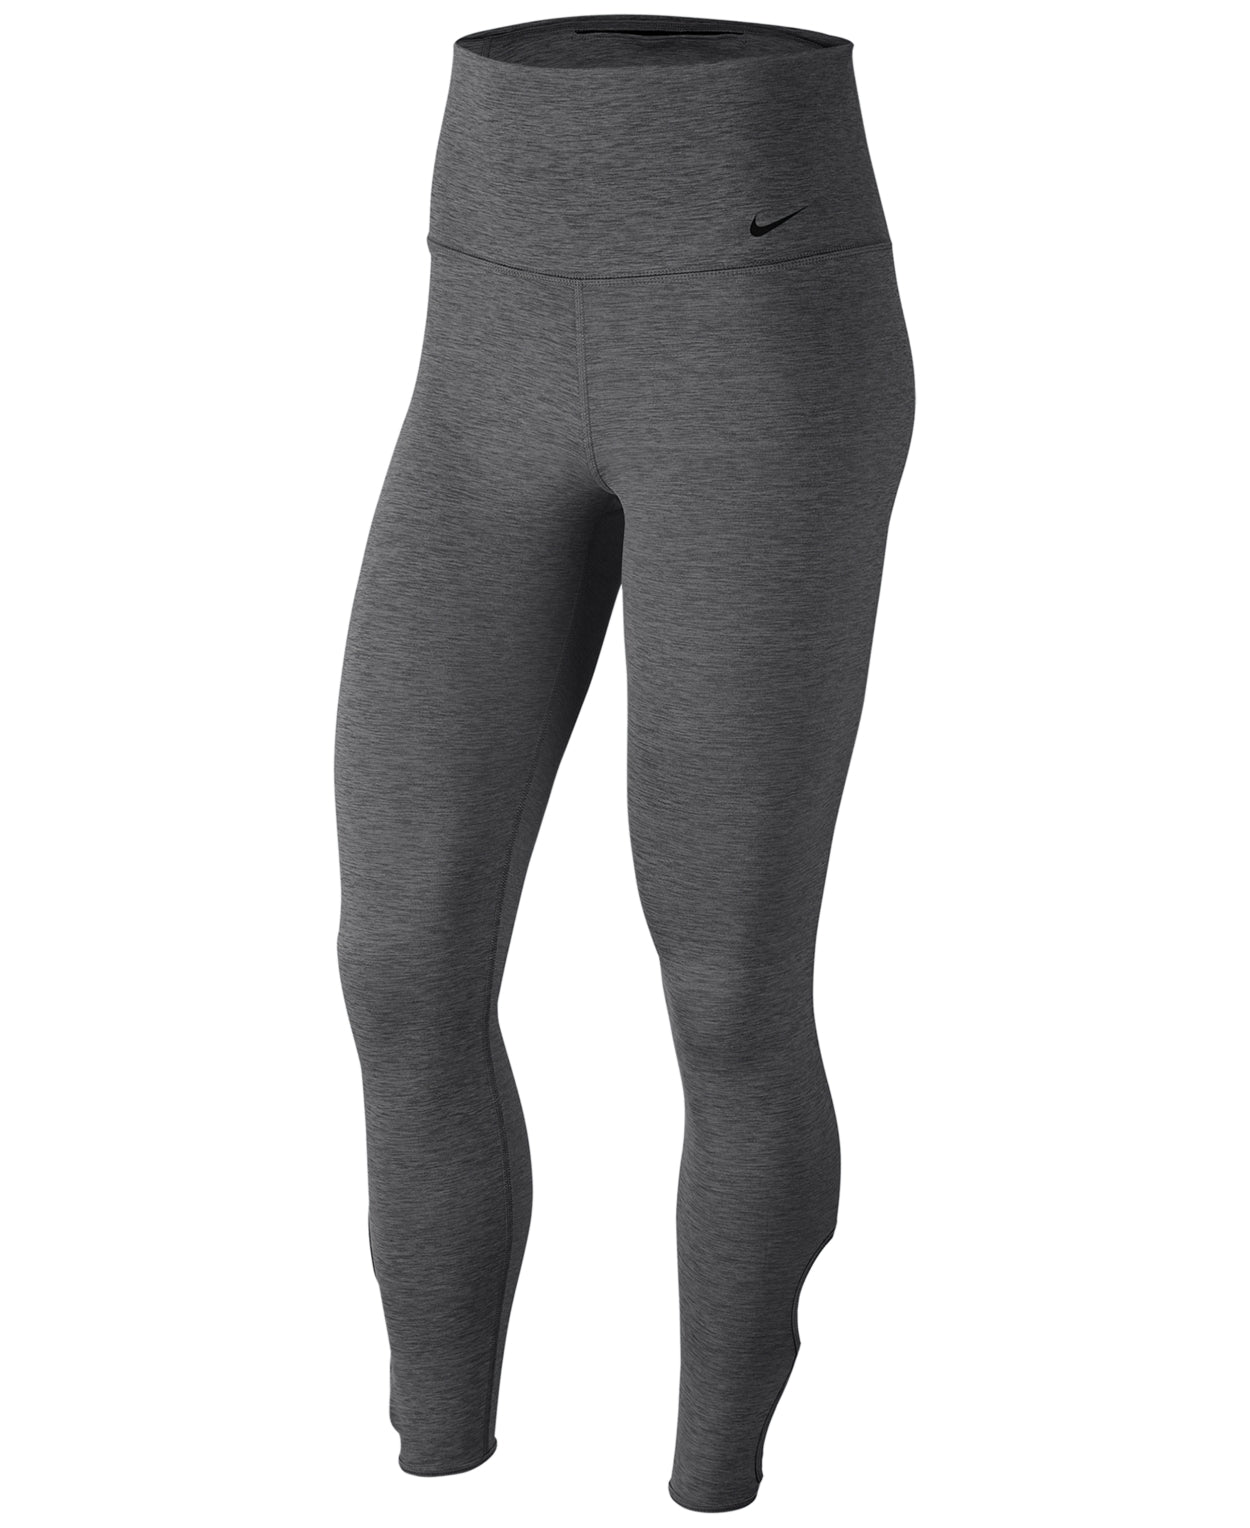 Nike Womens Yoga Dri Fit Cutout Leggings - image 1 of 3